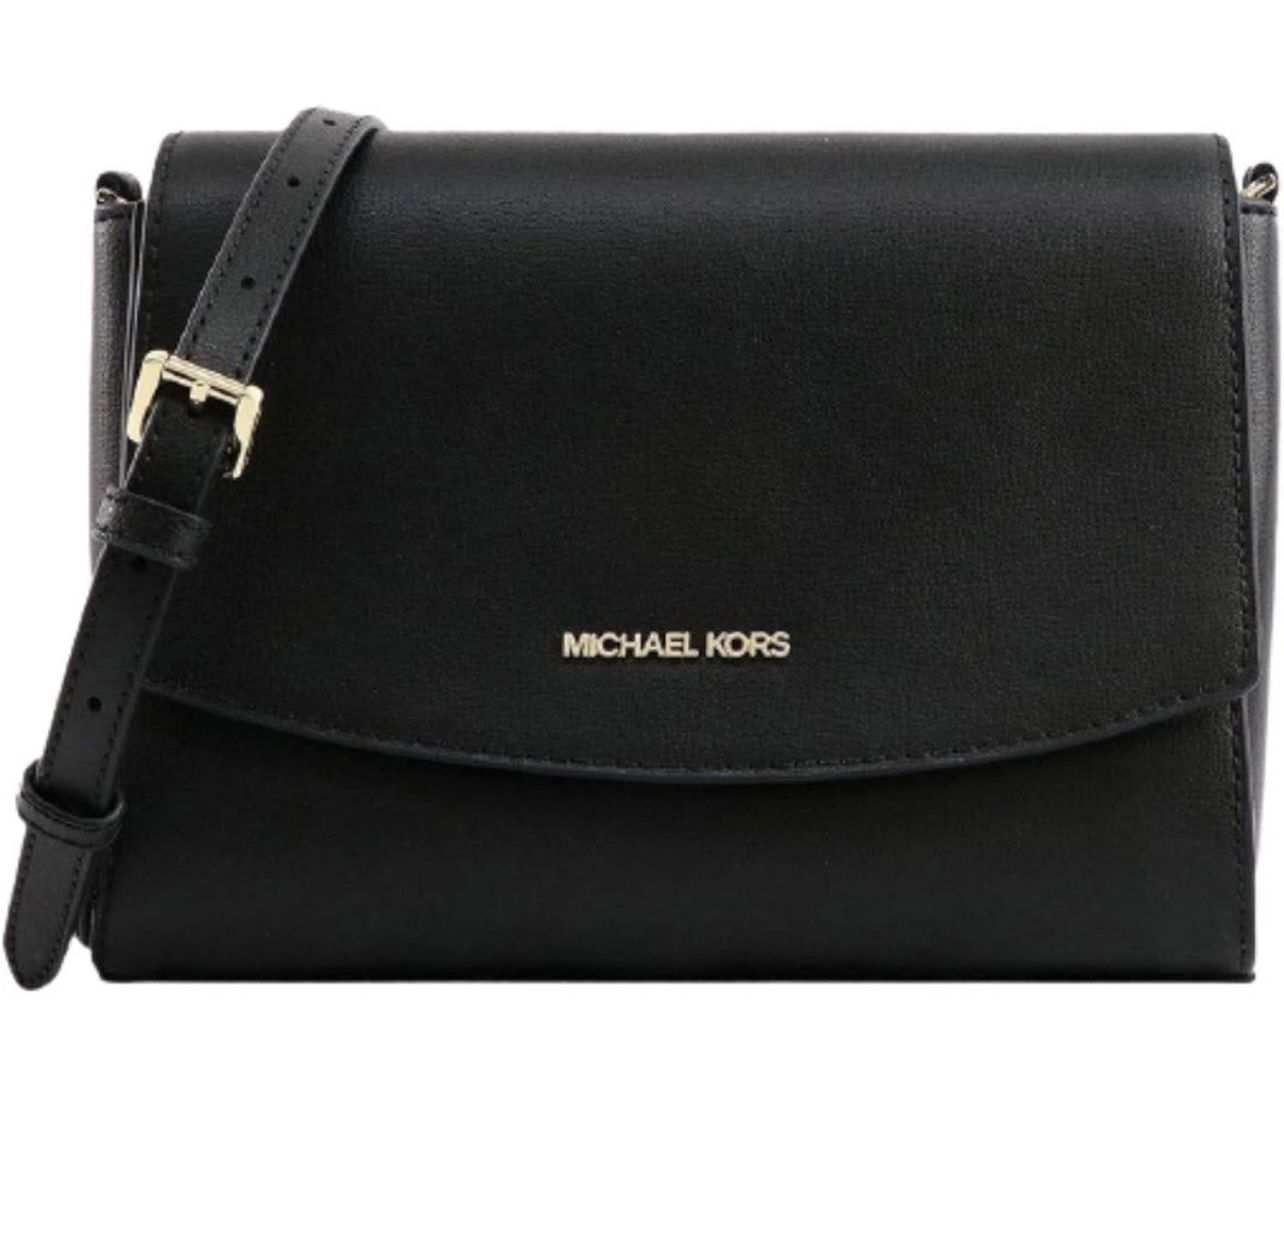 Michael Kors Medium Flap Messenger Leather Crossbody Bag Black